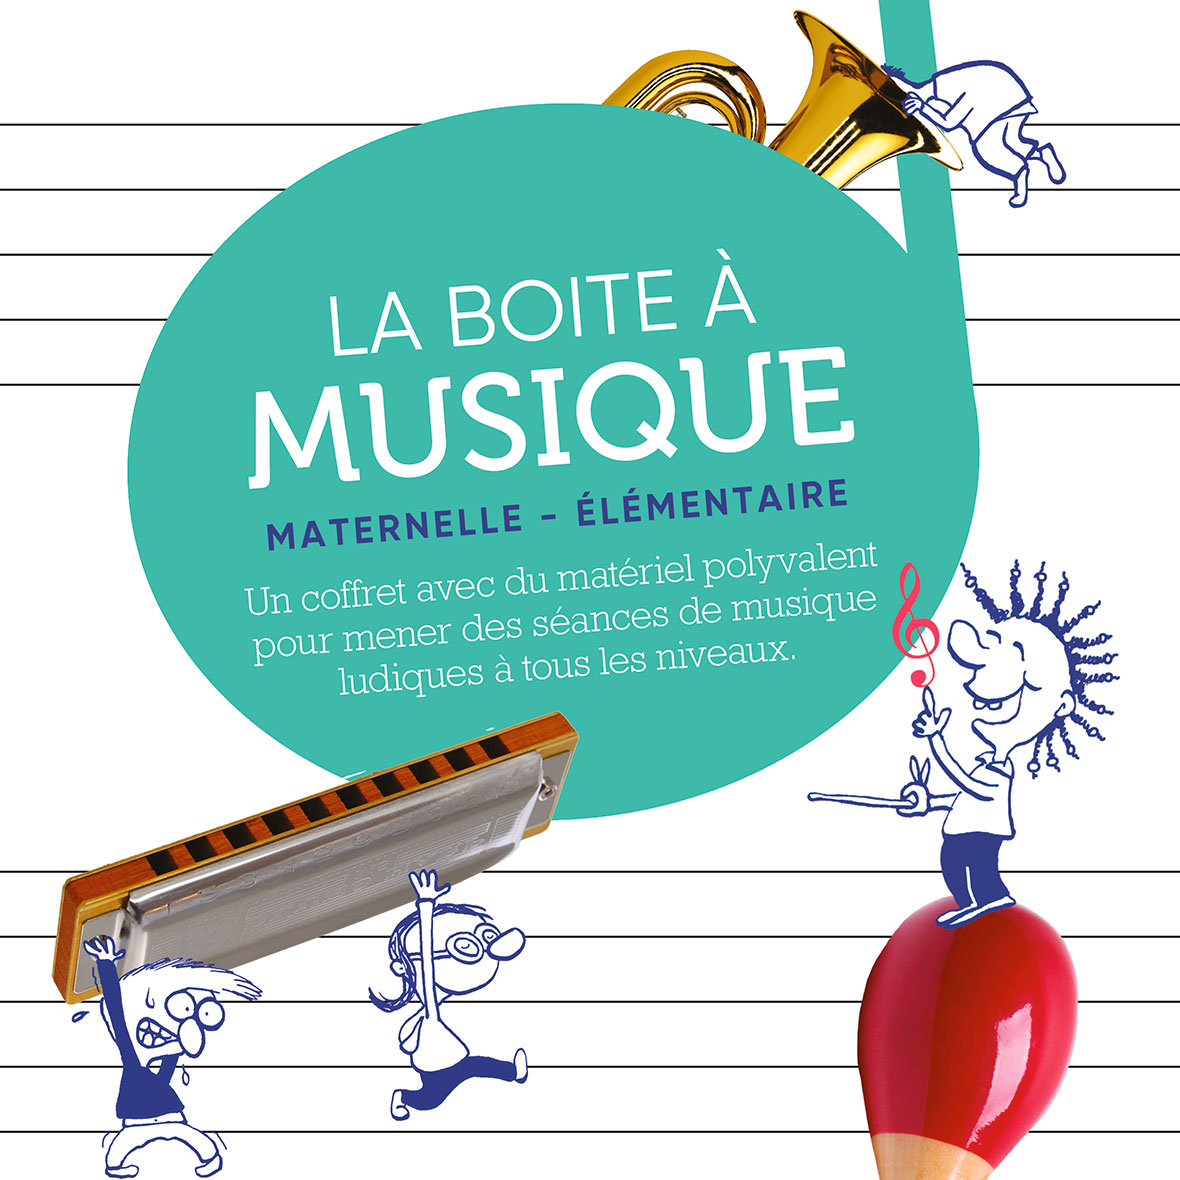 La boite a musique miniature 1 acces editions